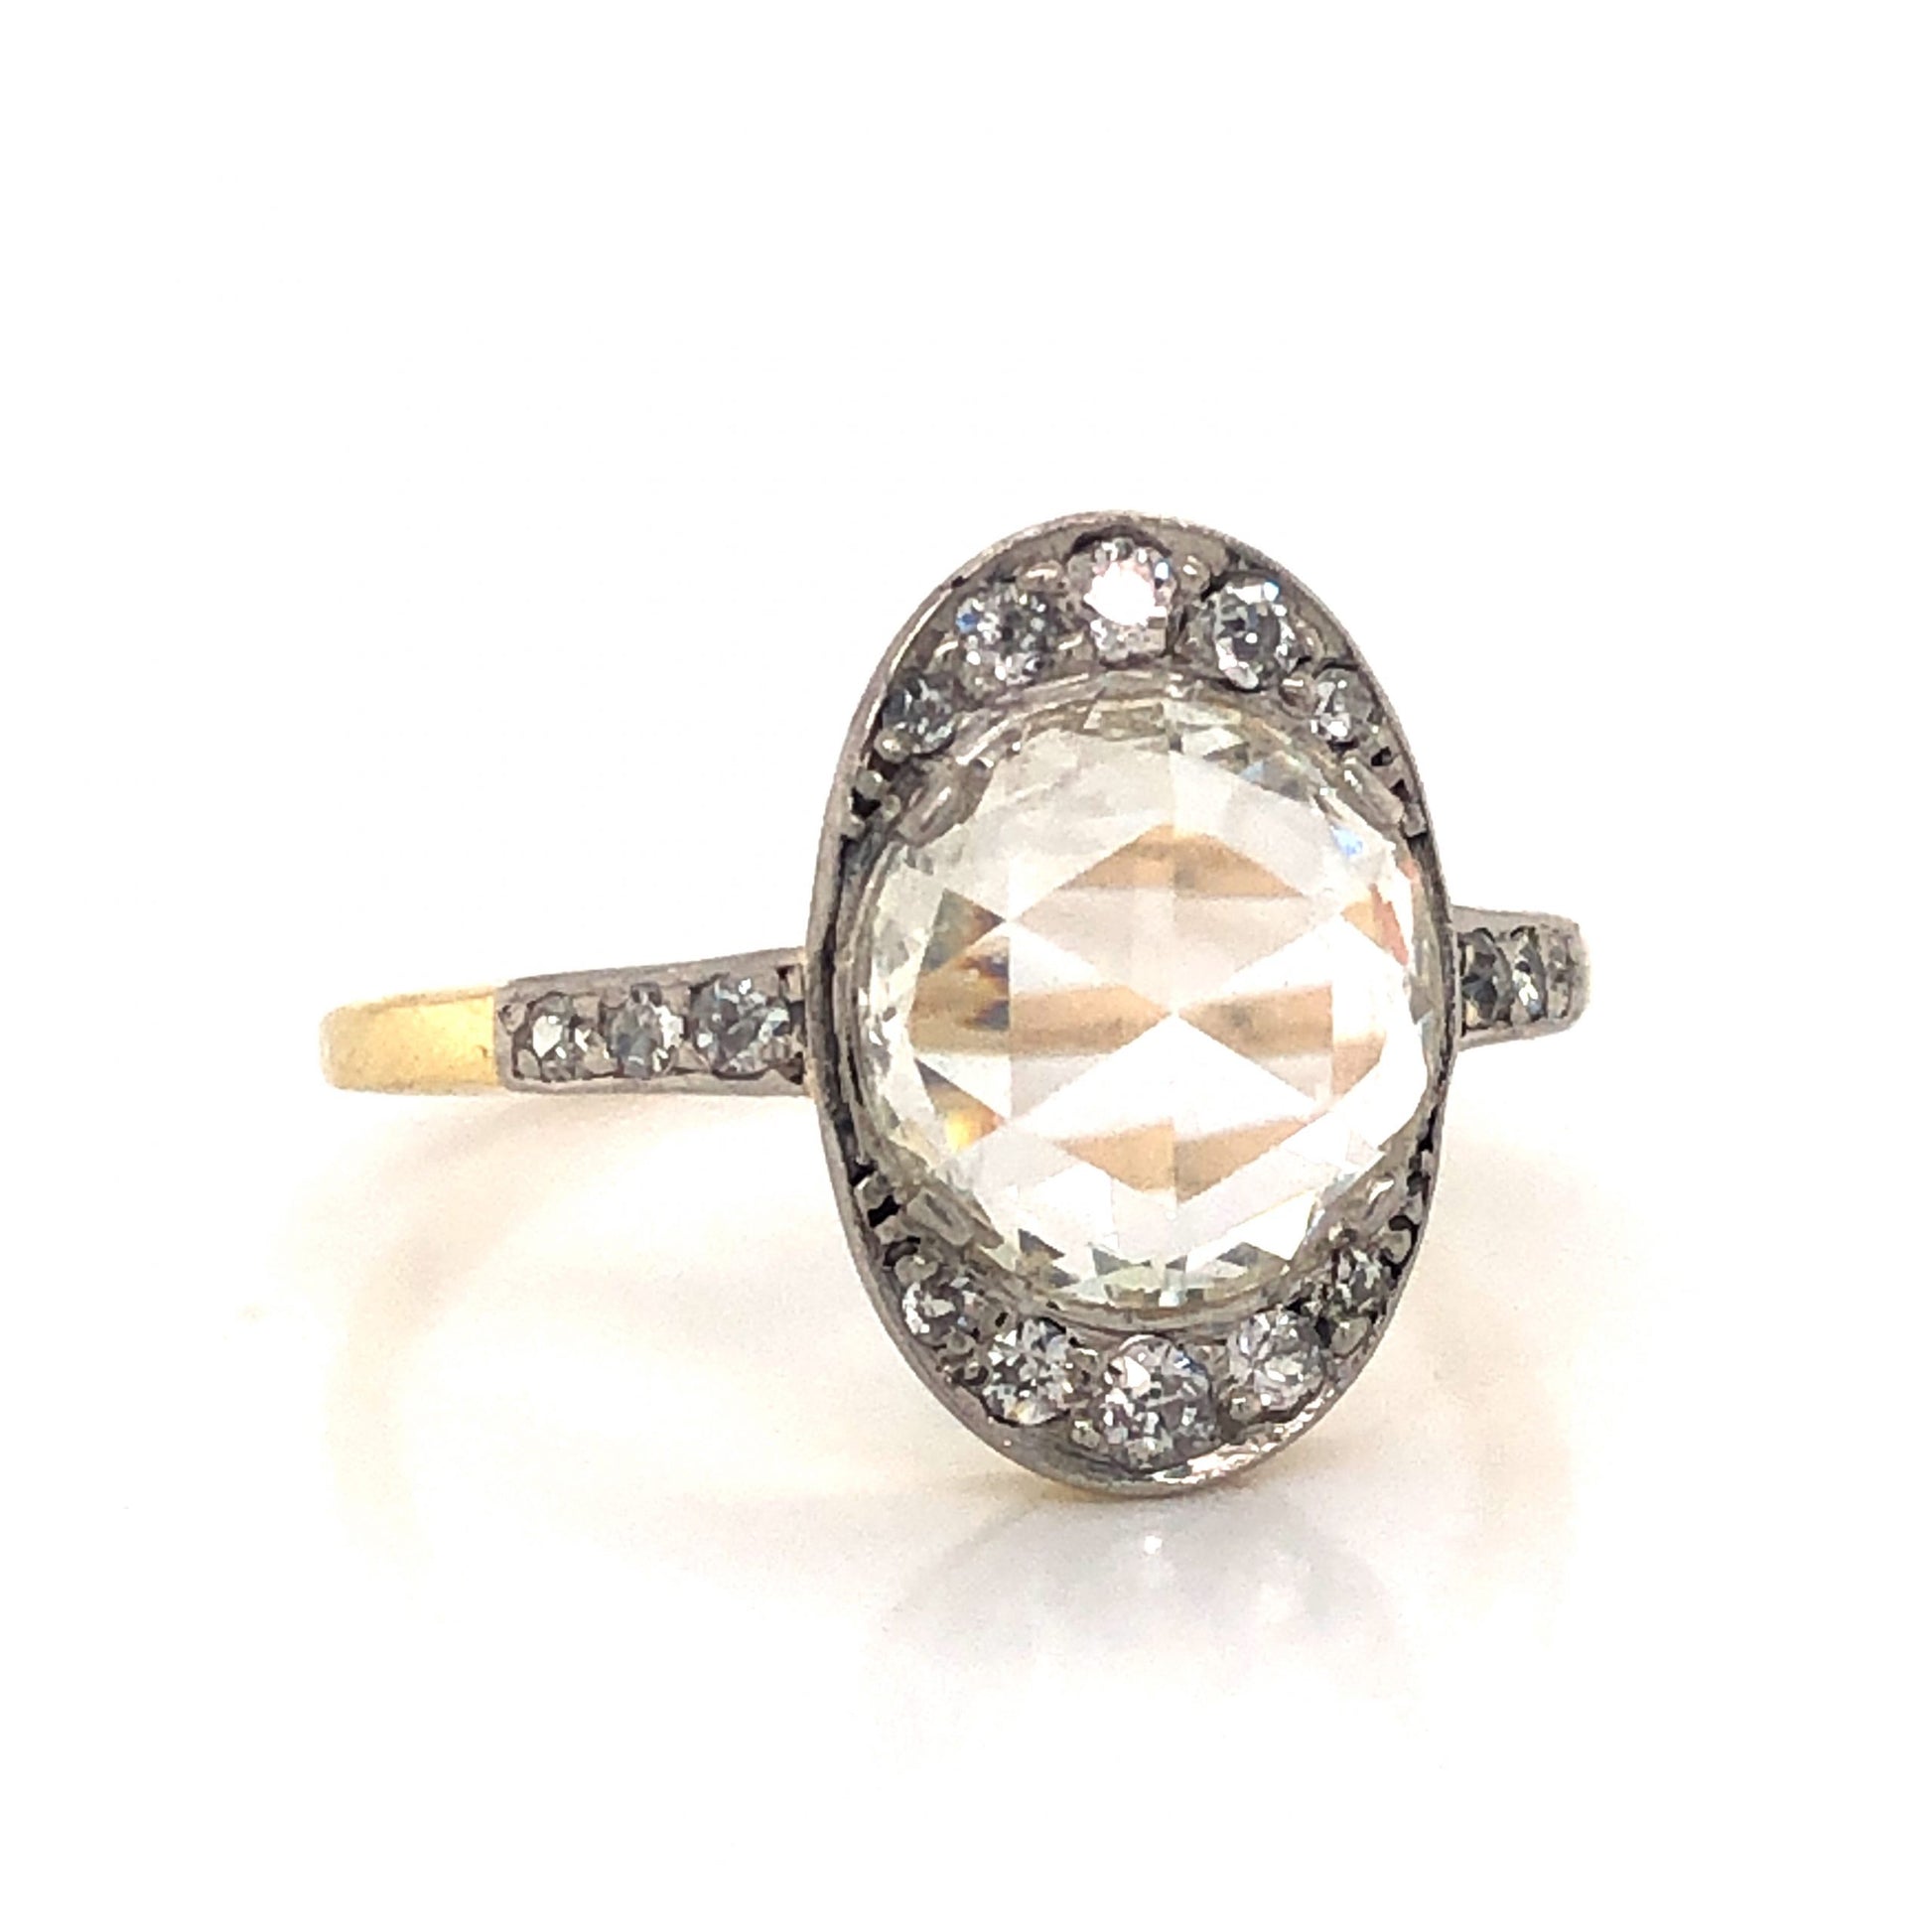 Victorian Round Rose Cut Diamond Engagement Ring in 14kComposition: 14 Karat White Gold/14 Karat Yellow Gold Ring Size: 7 Total Diamond Weight: 1.79ct Total Gram Weight: 2.4 g